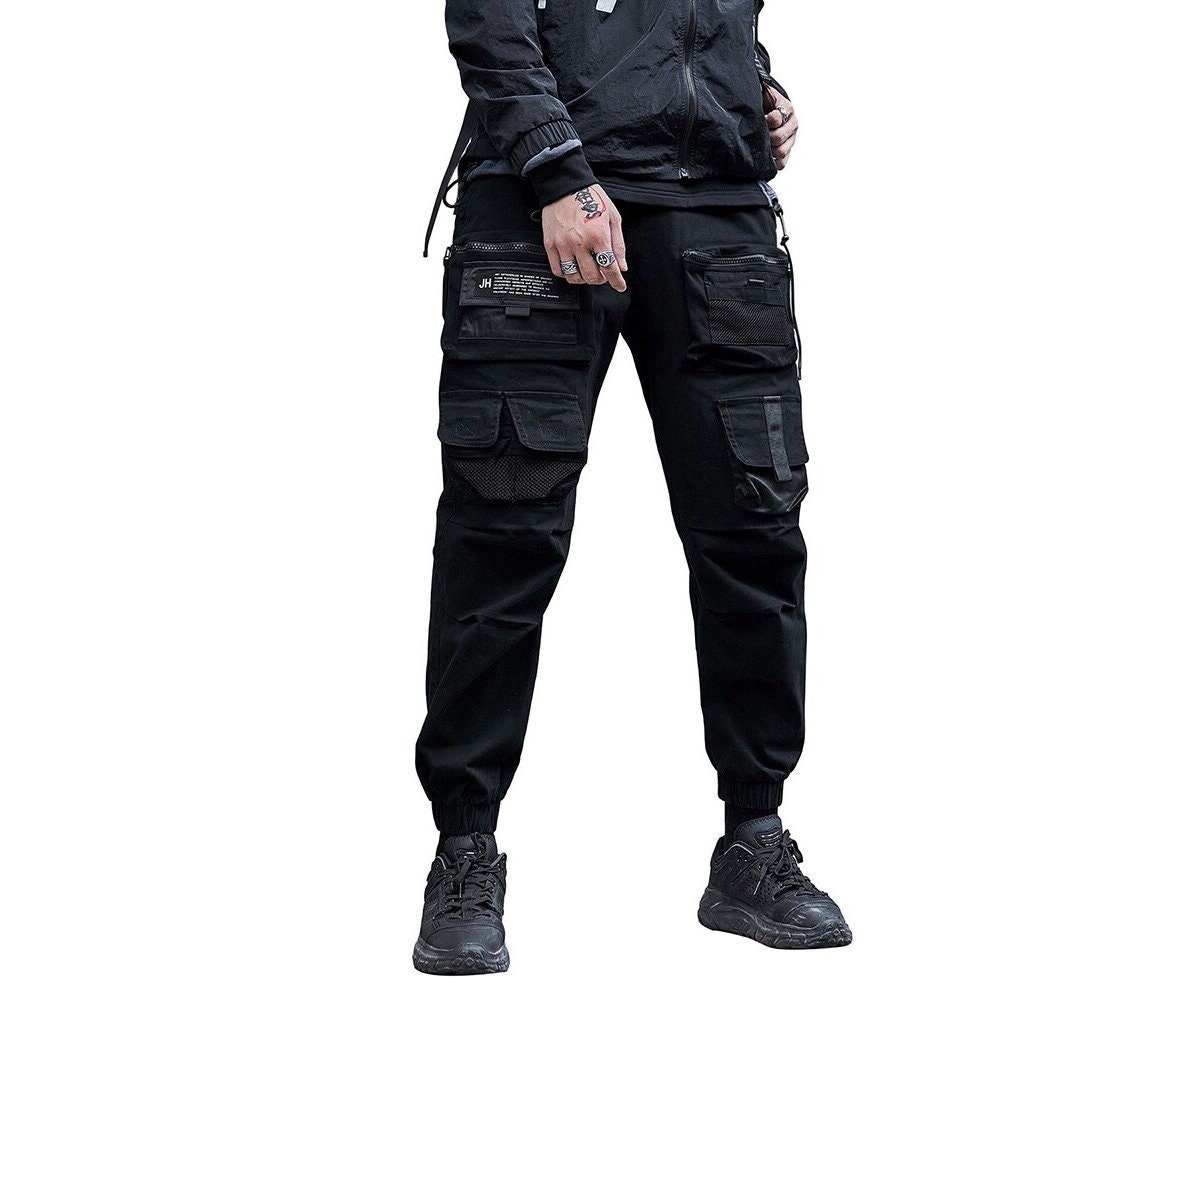 Streetwear Cyberpunk Harajuku Dark Green Cargo Pants For Men Urban Fashion Casual Slim Fit Joggers